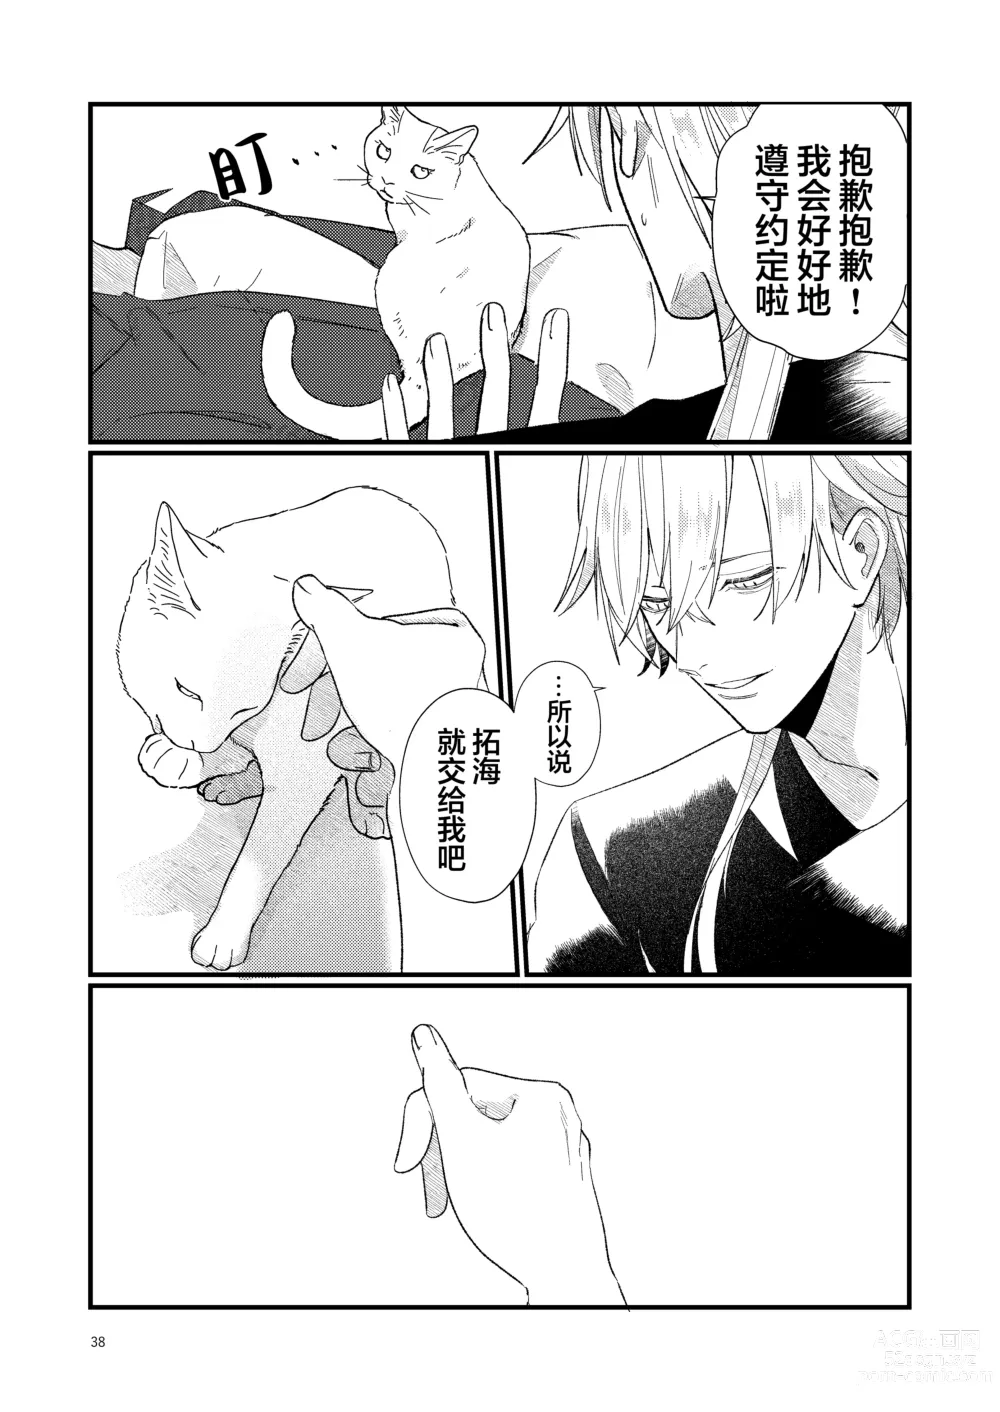 Page 38 of doujinshi 捡回家的猫竟是猫妖